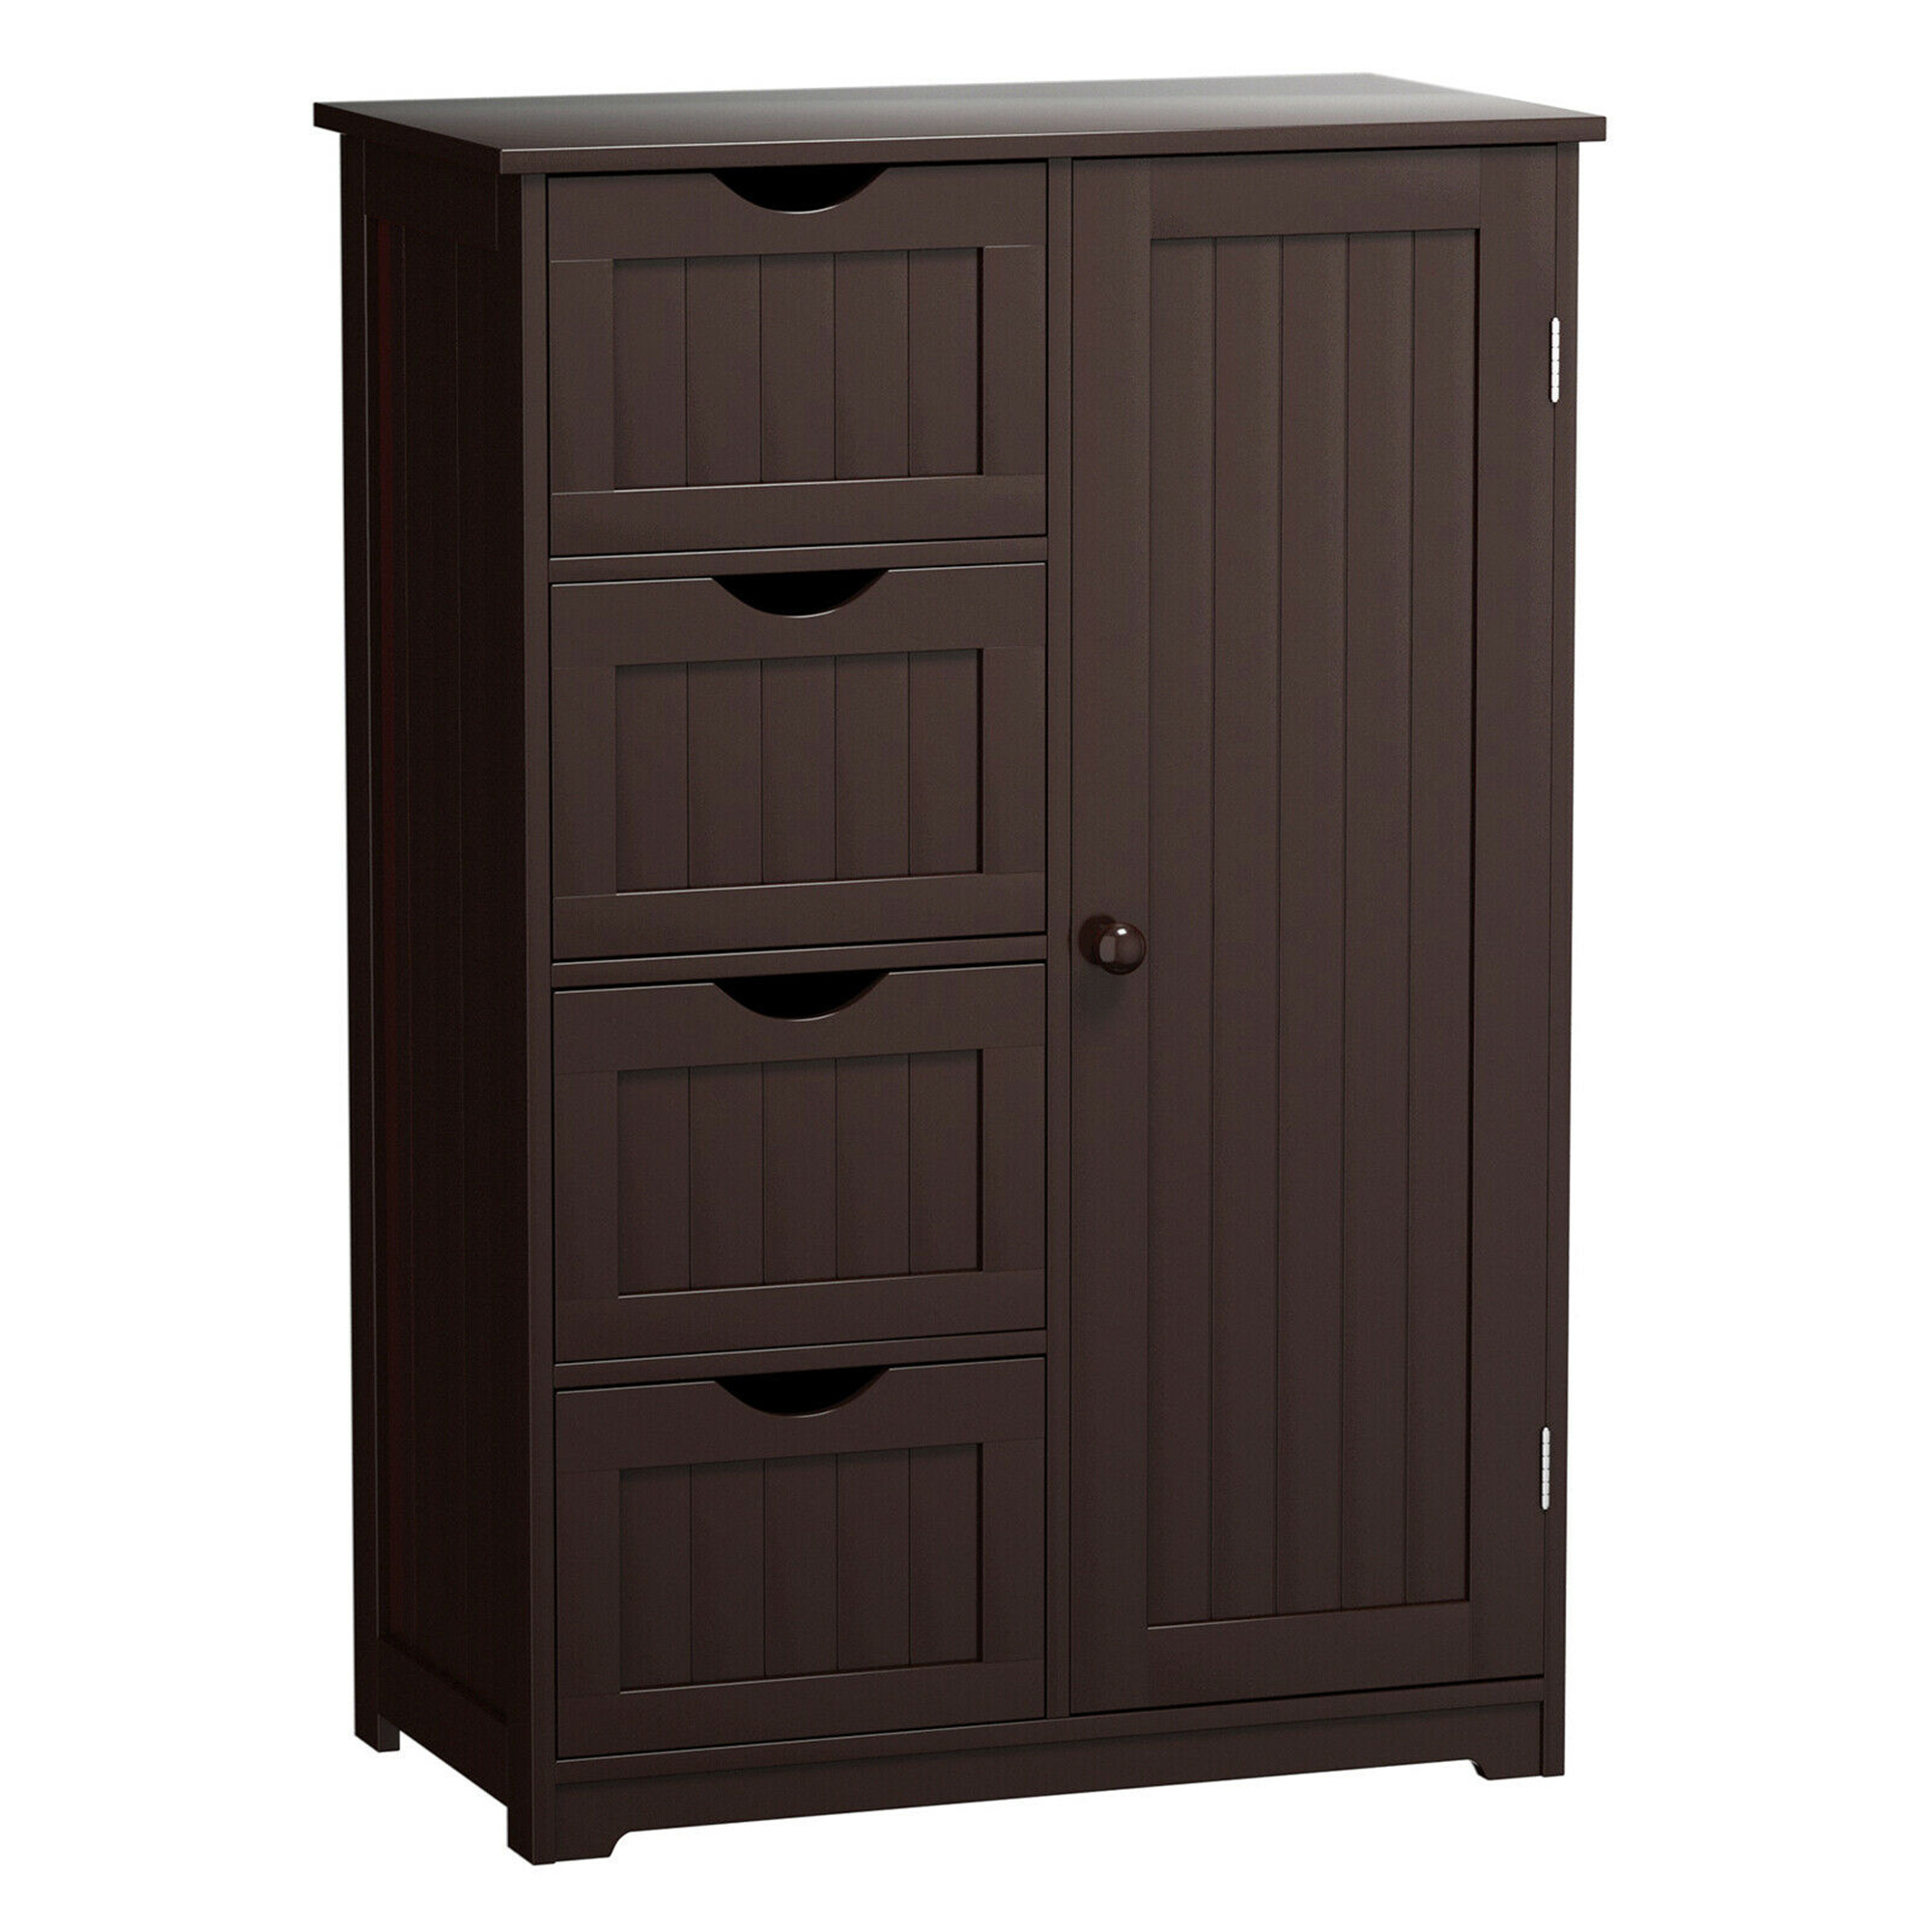 

Bathroom Floor Cabinet Storage Organizer Cupboard W/ 4 Drawers Adjustable Shelf Brown